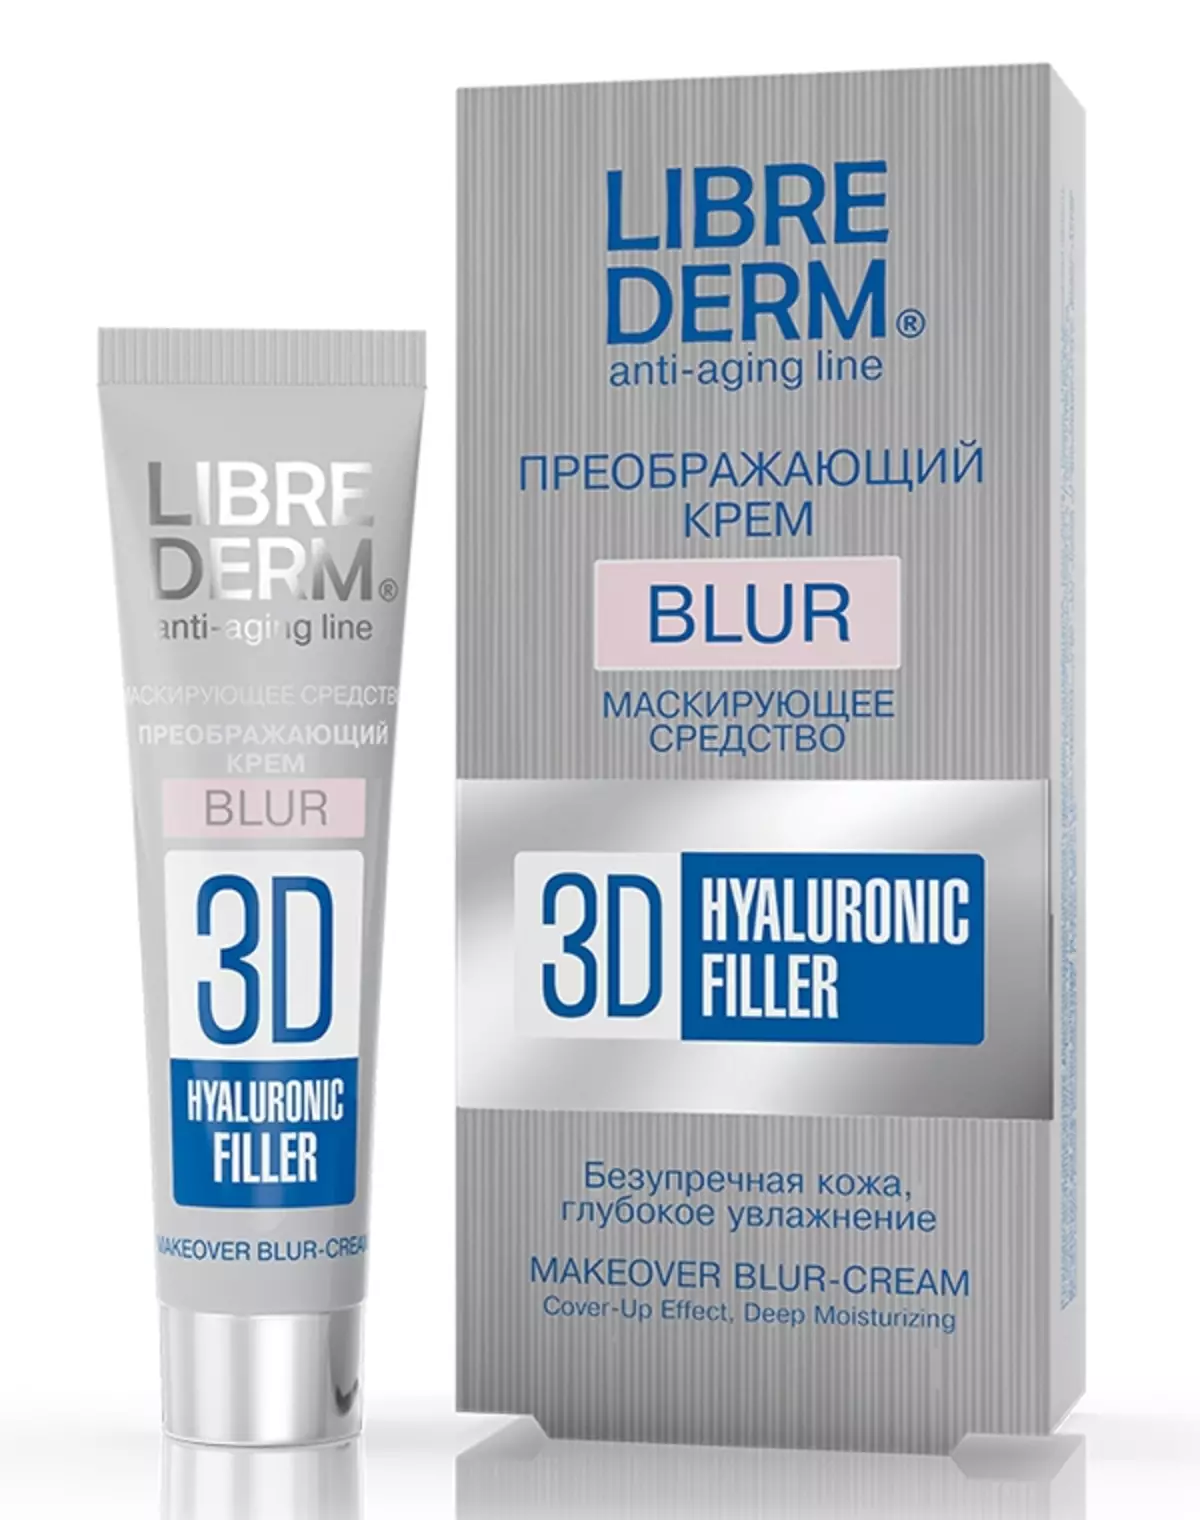 Librederm化妝品：用透明質酸和其他產品的面孔選擇資金。評論美容師和買家 4395_15